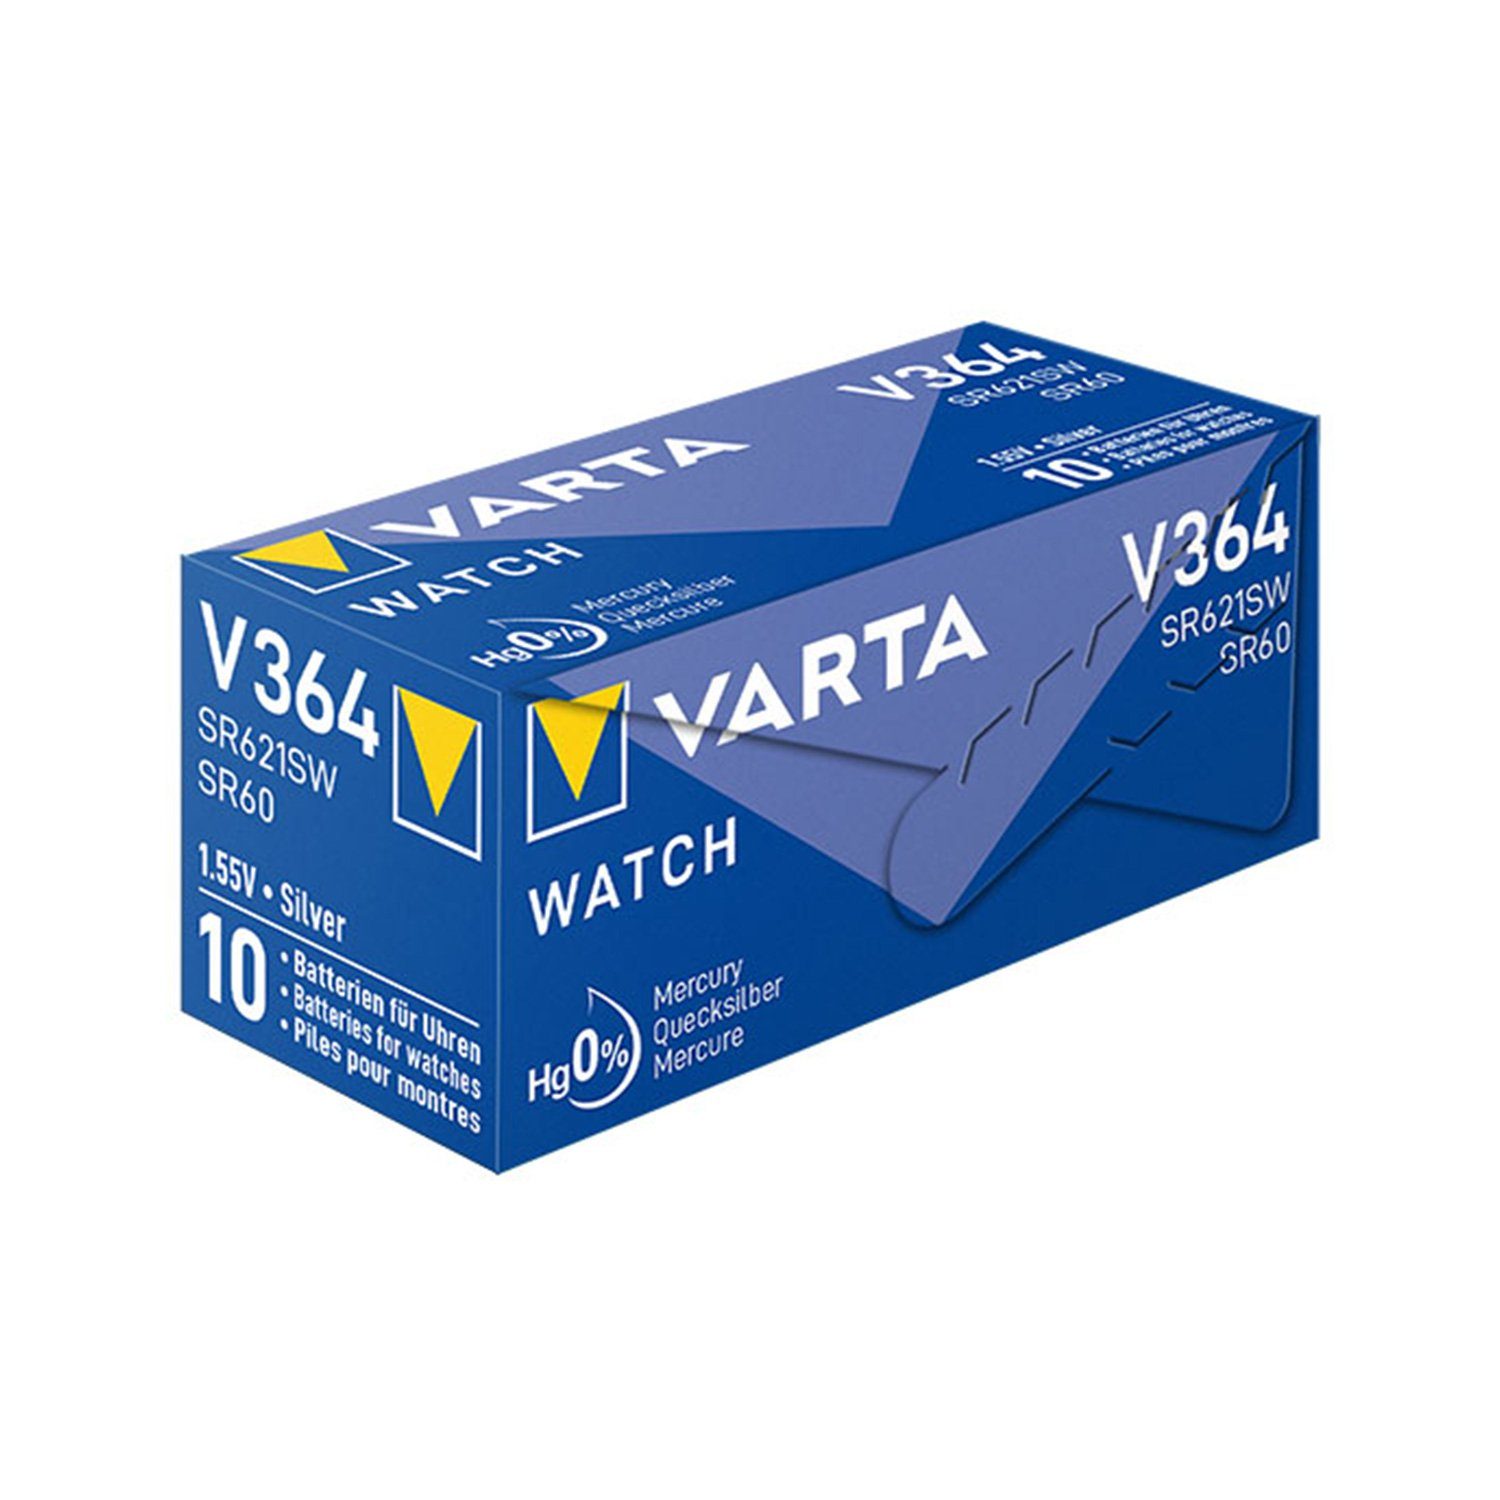 VARTA Varta 364 Knopfzelle Batterie